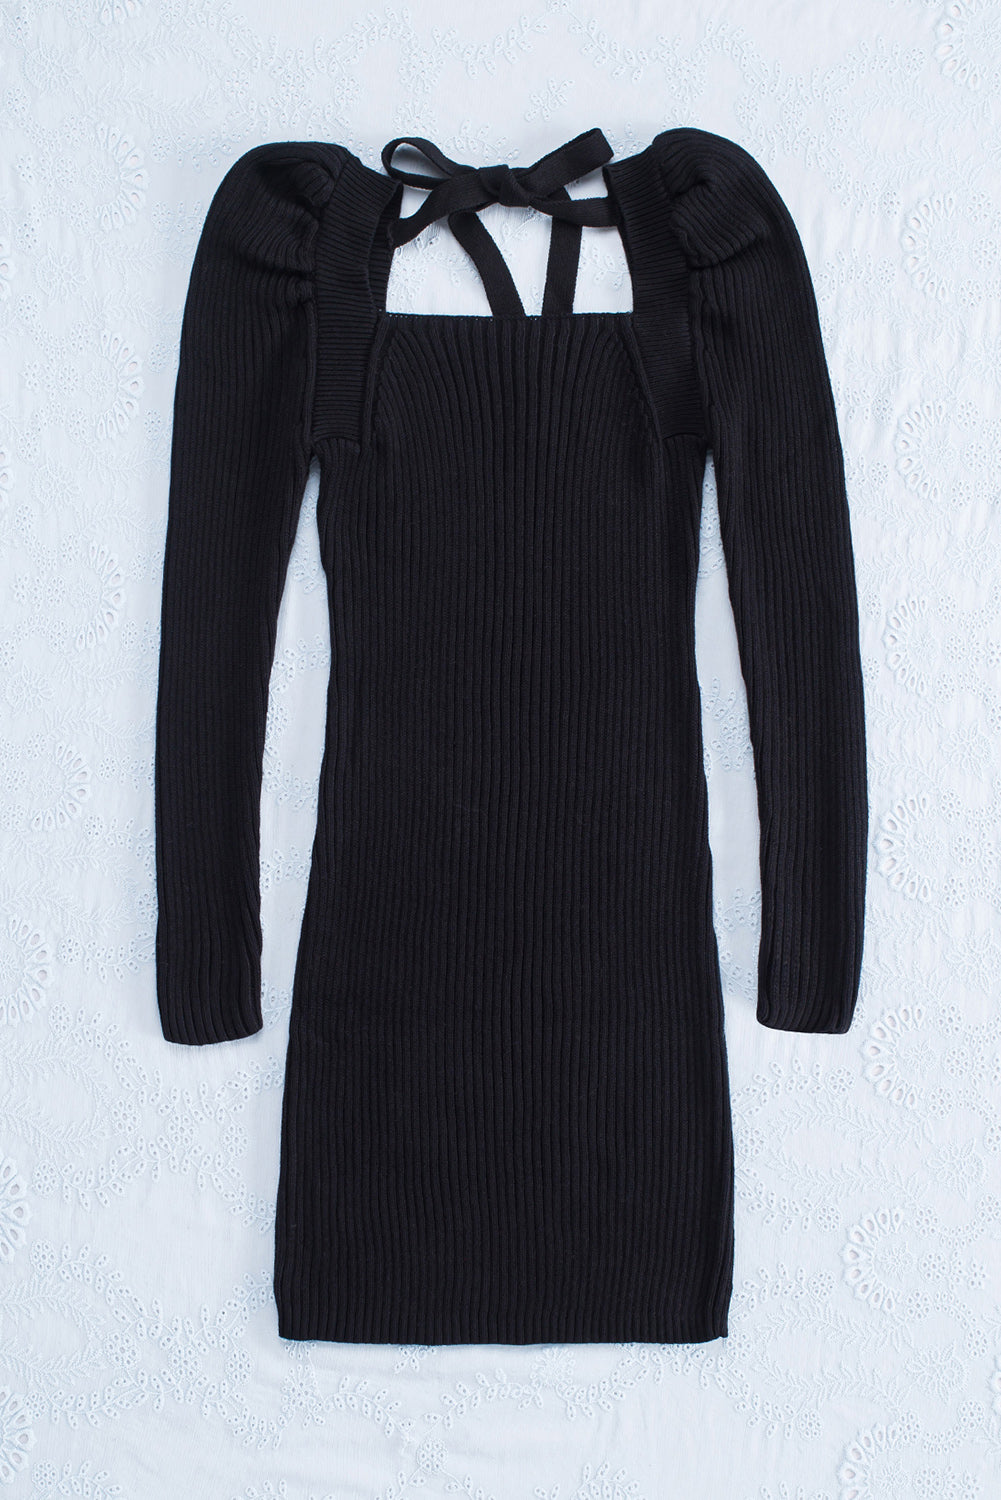 Black Square Neck Puffy Sleeve Sweater Dress